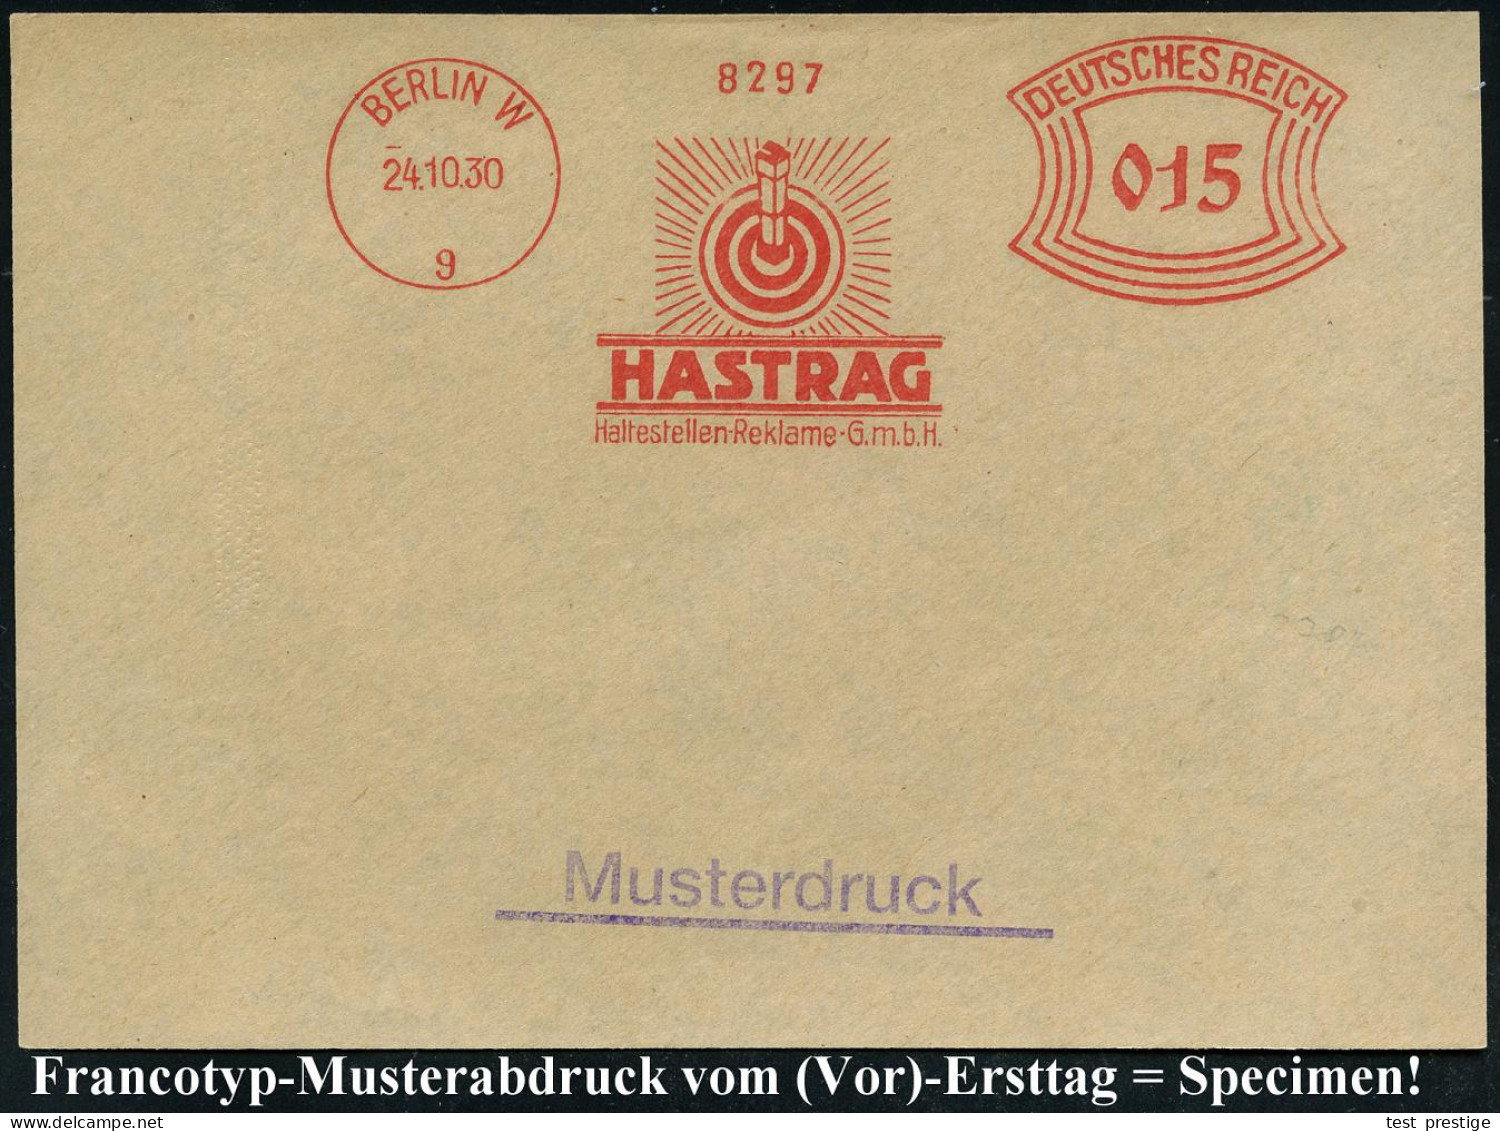 BERLIN W/ 9/ HASTRAG/ Haltestellen-Reklame-GmbH 1930 (24.10.) AFS-Musterabdruck Francotyp "Bogenrechteck" = Gläserne Hal - Glas & Fenster